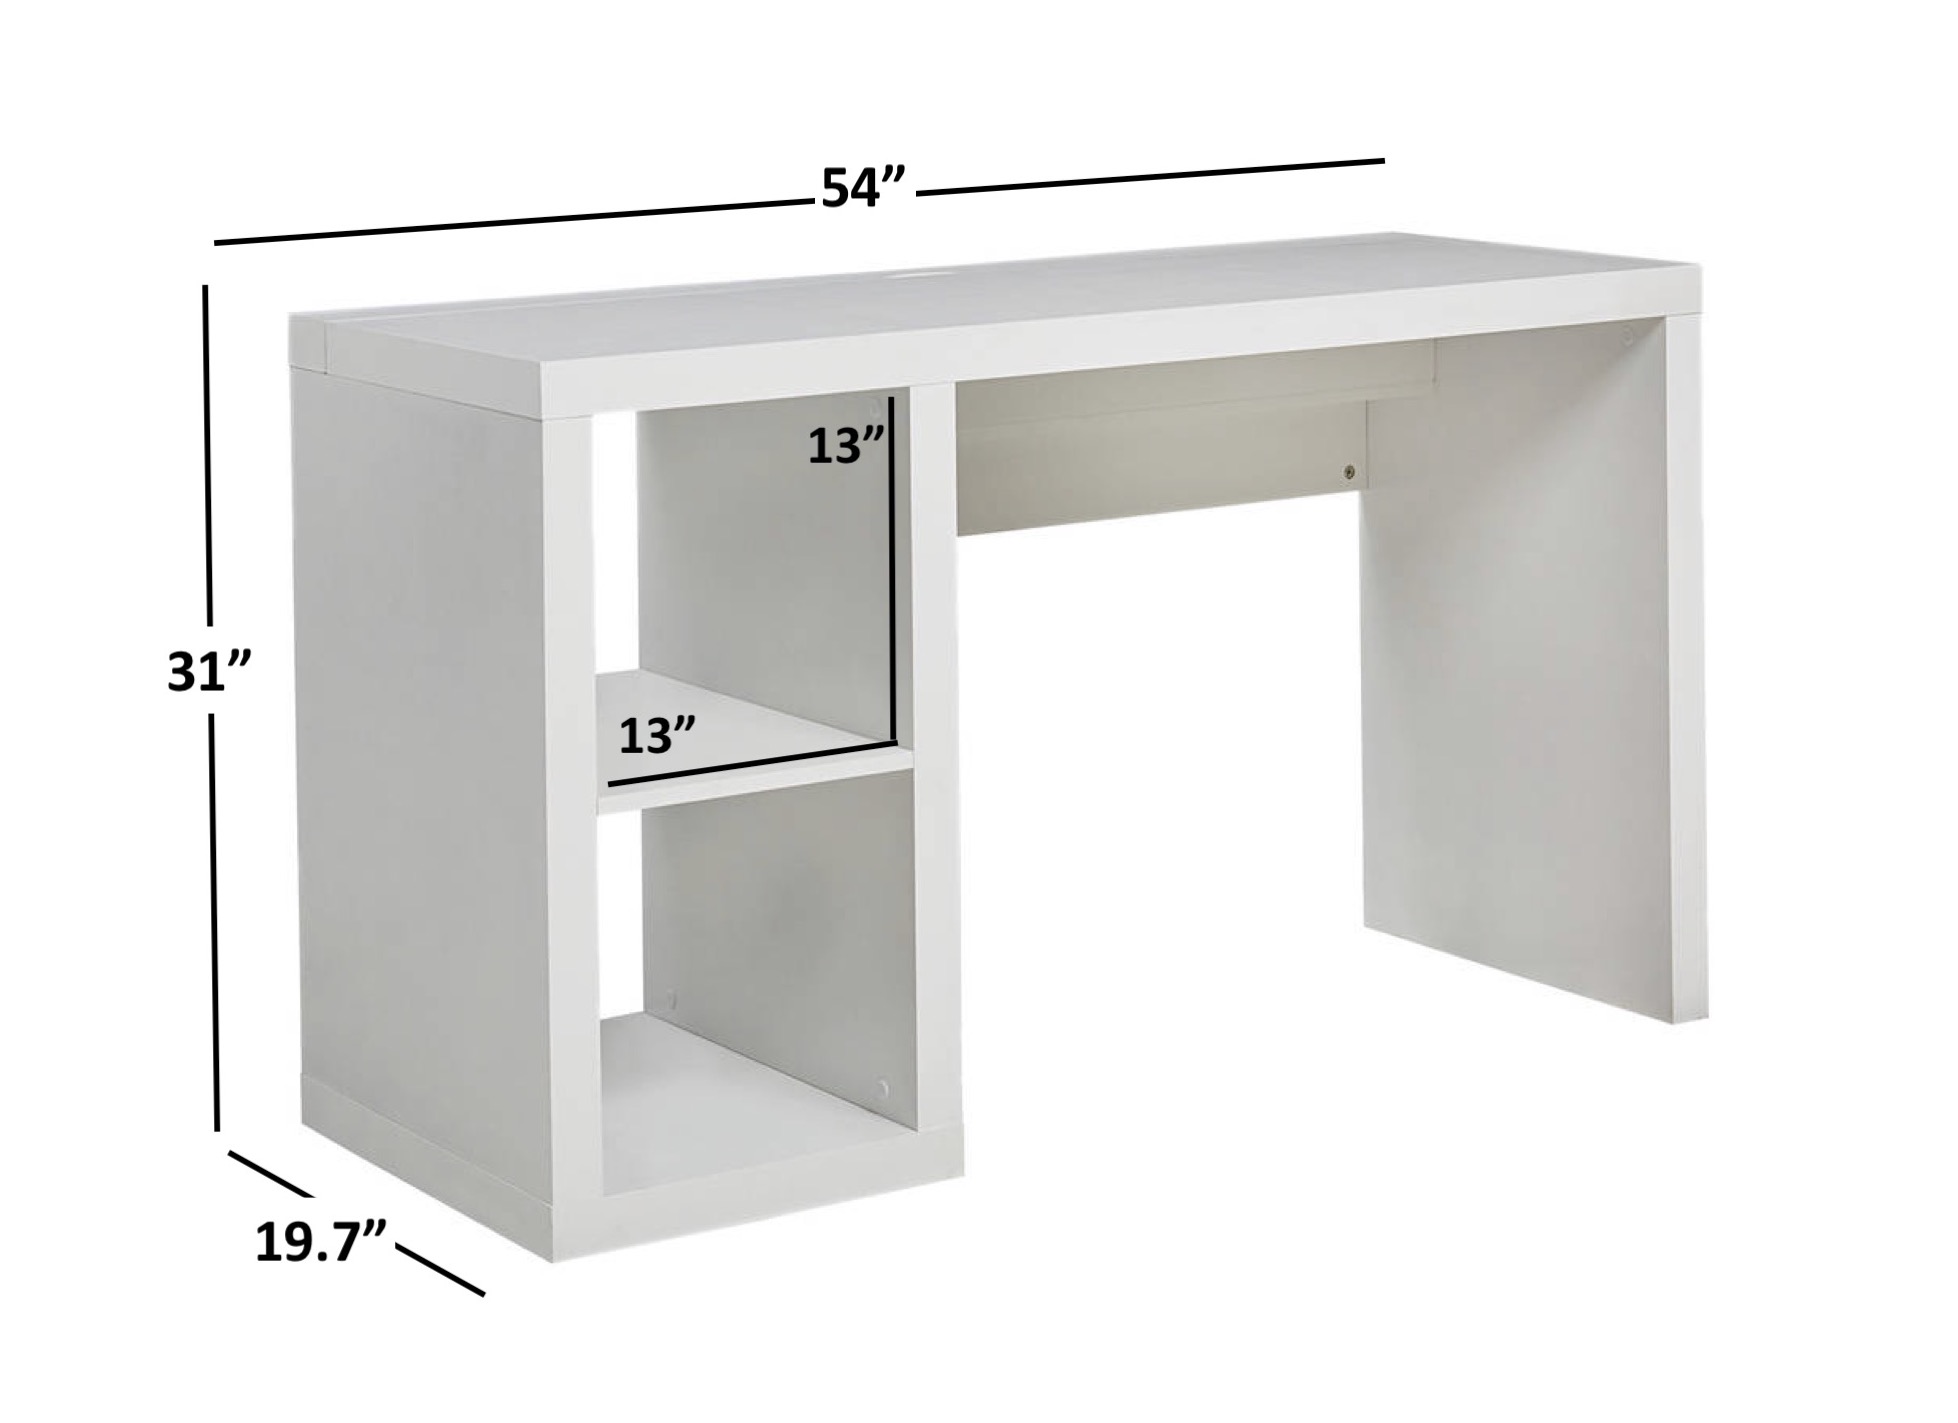 Better Homes & Gardens Cube Storage Office Desk, White - image 5 of 6